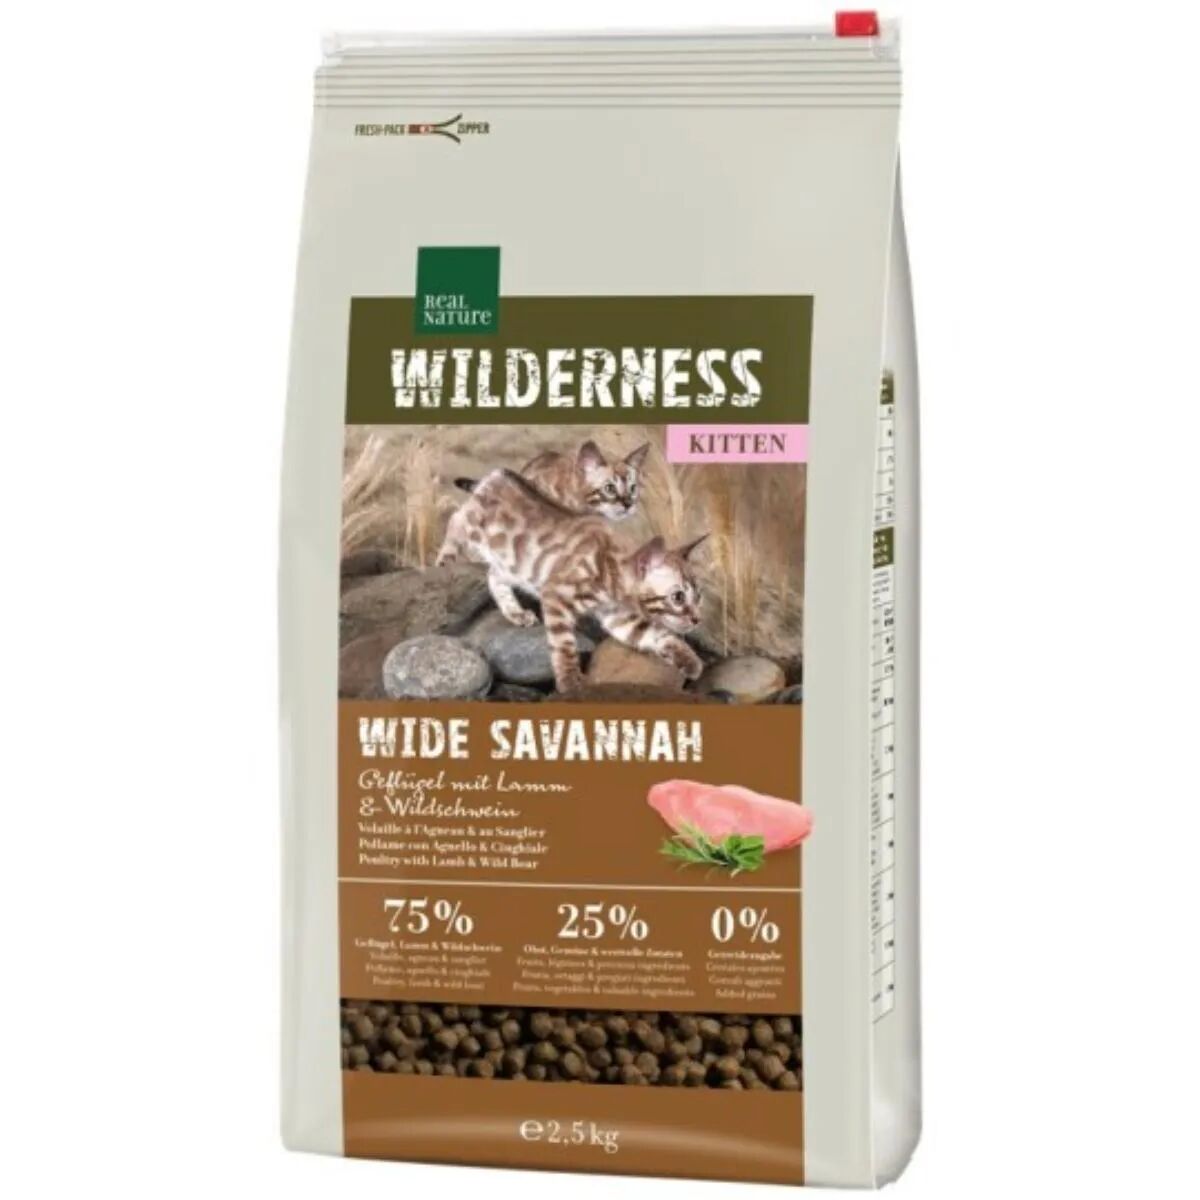 REAL NATURE Wilderness Cat Kitten Wide Savannah 2.5KG